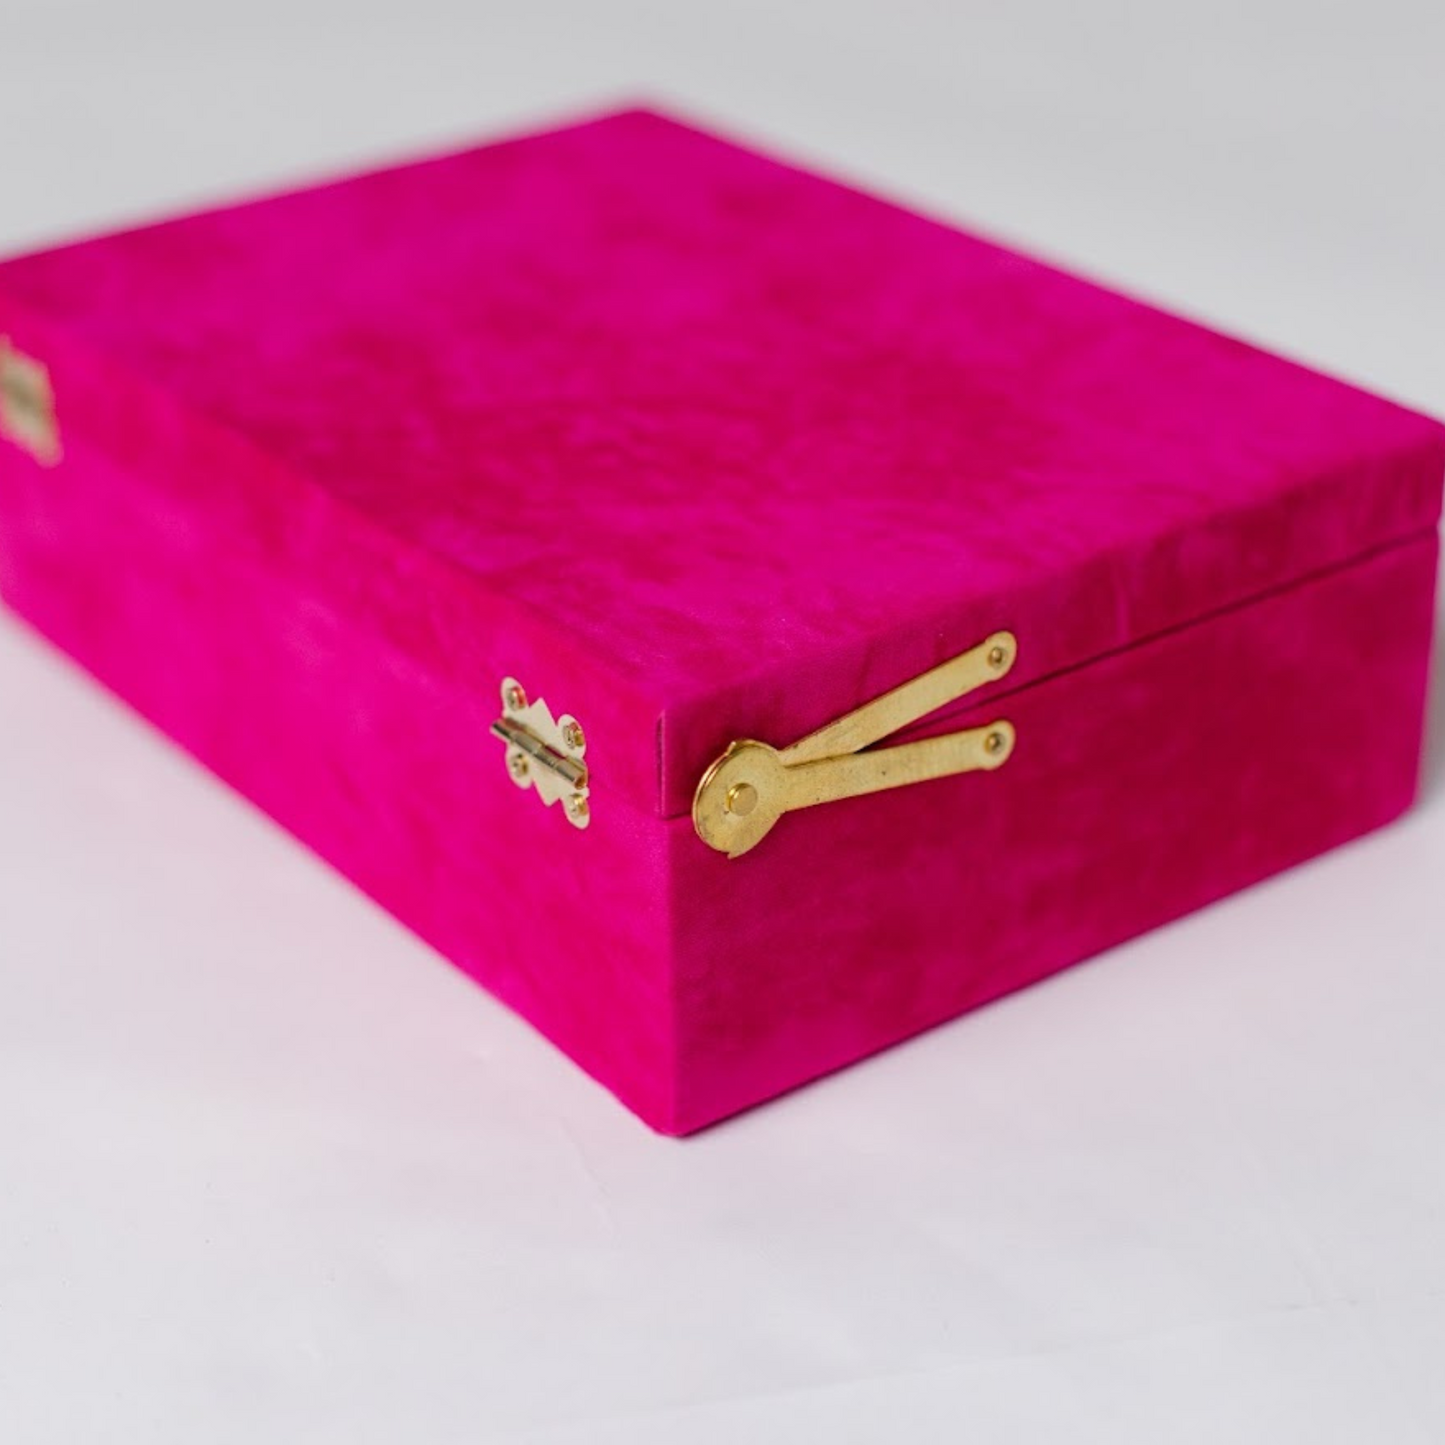 Suede luxury pink box